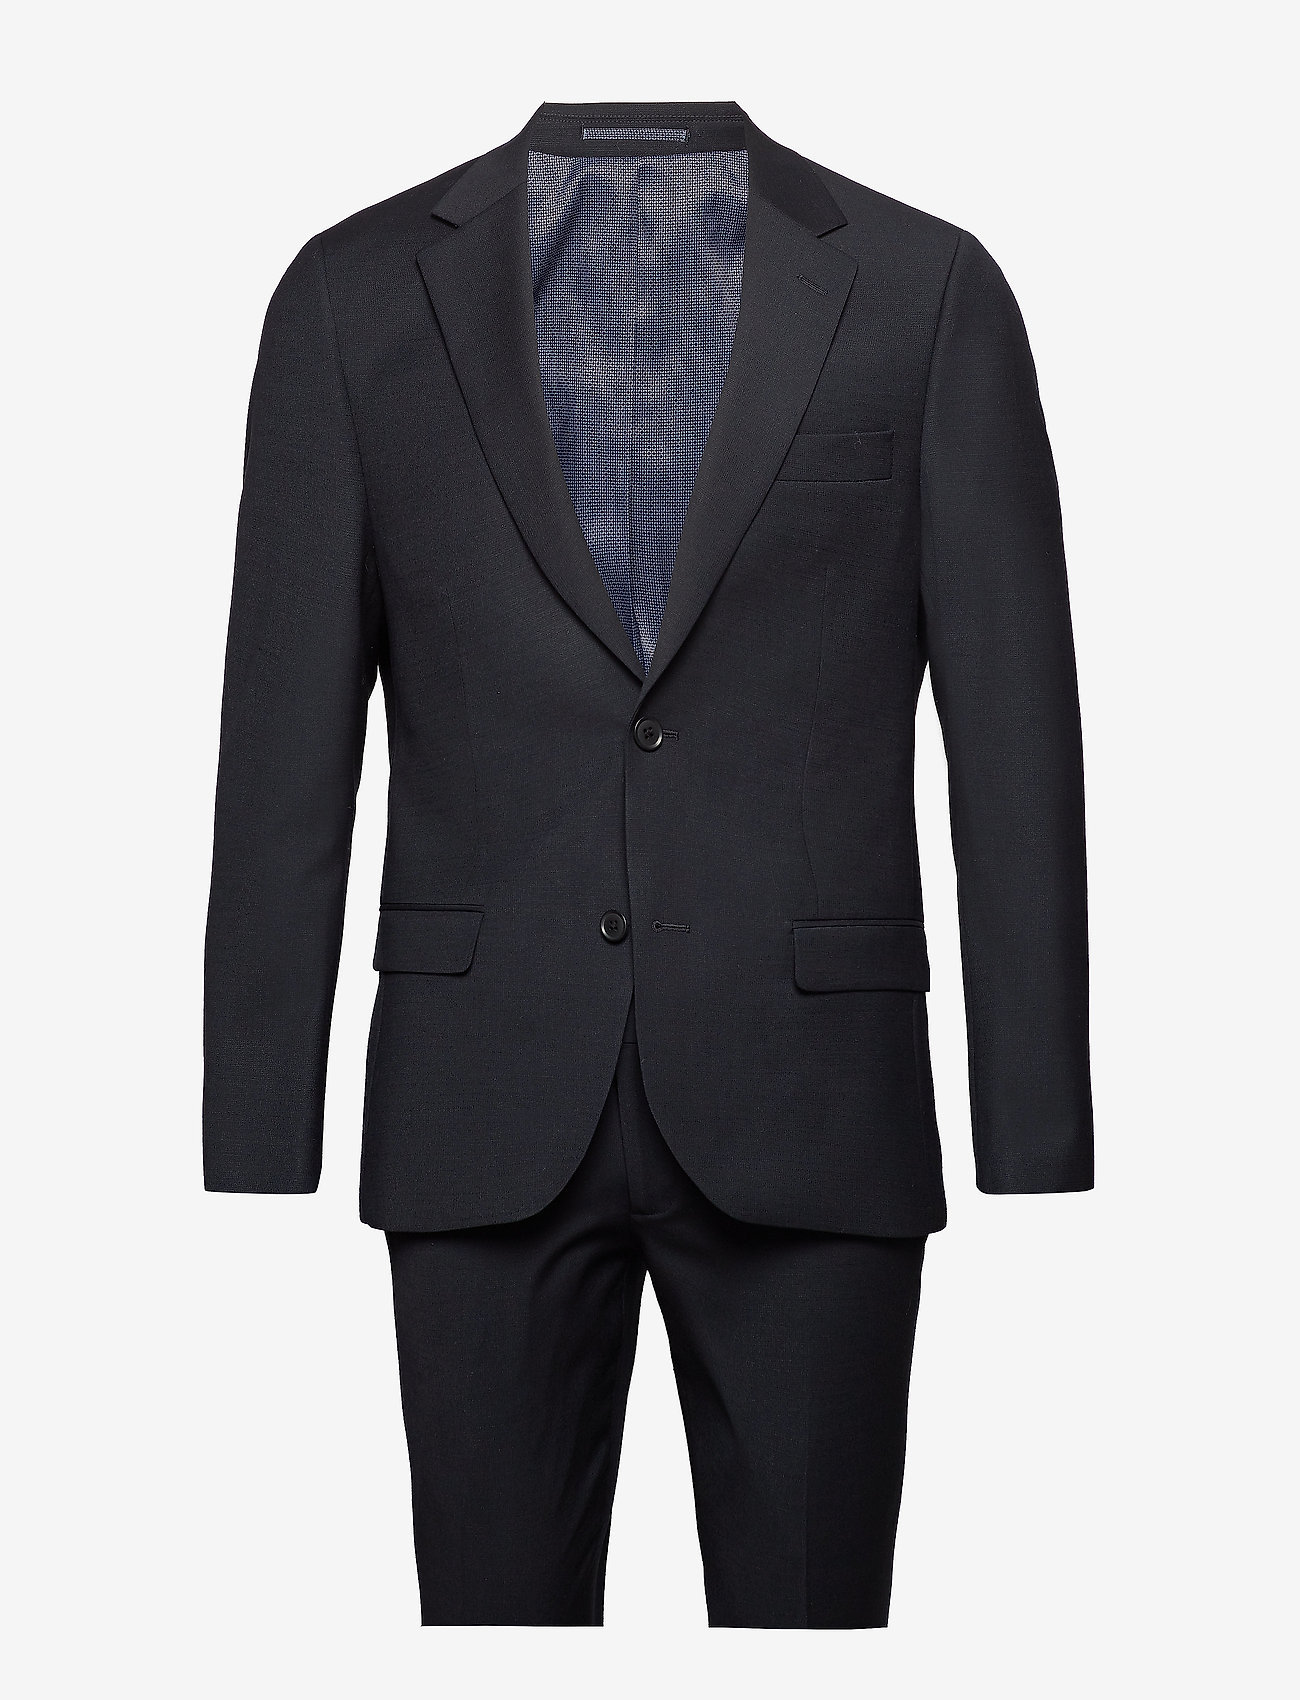 Bruun & Stengade - Hardmann, Suit Set - black - 0